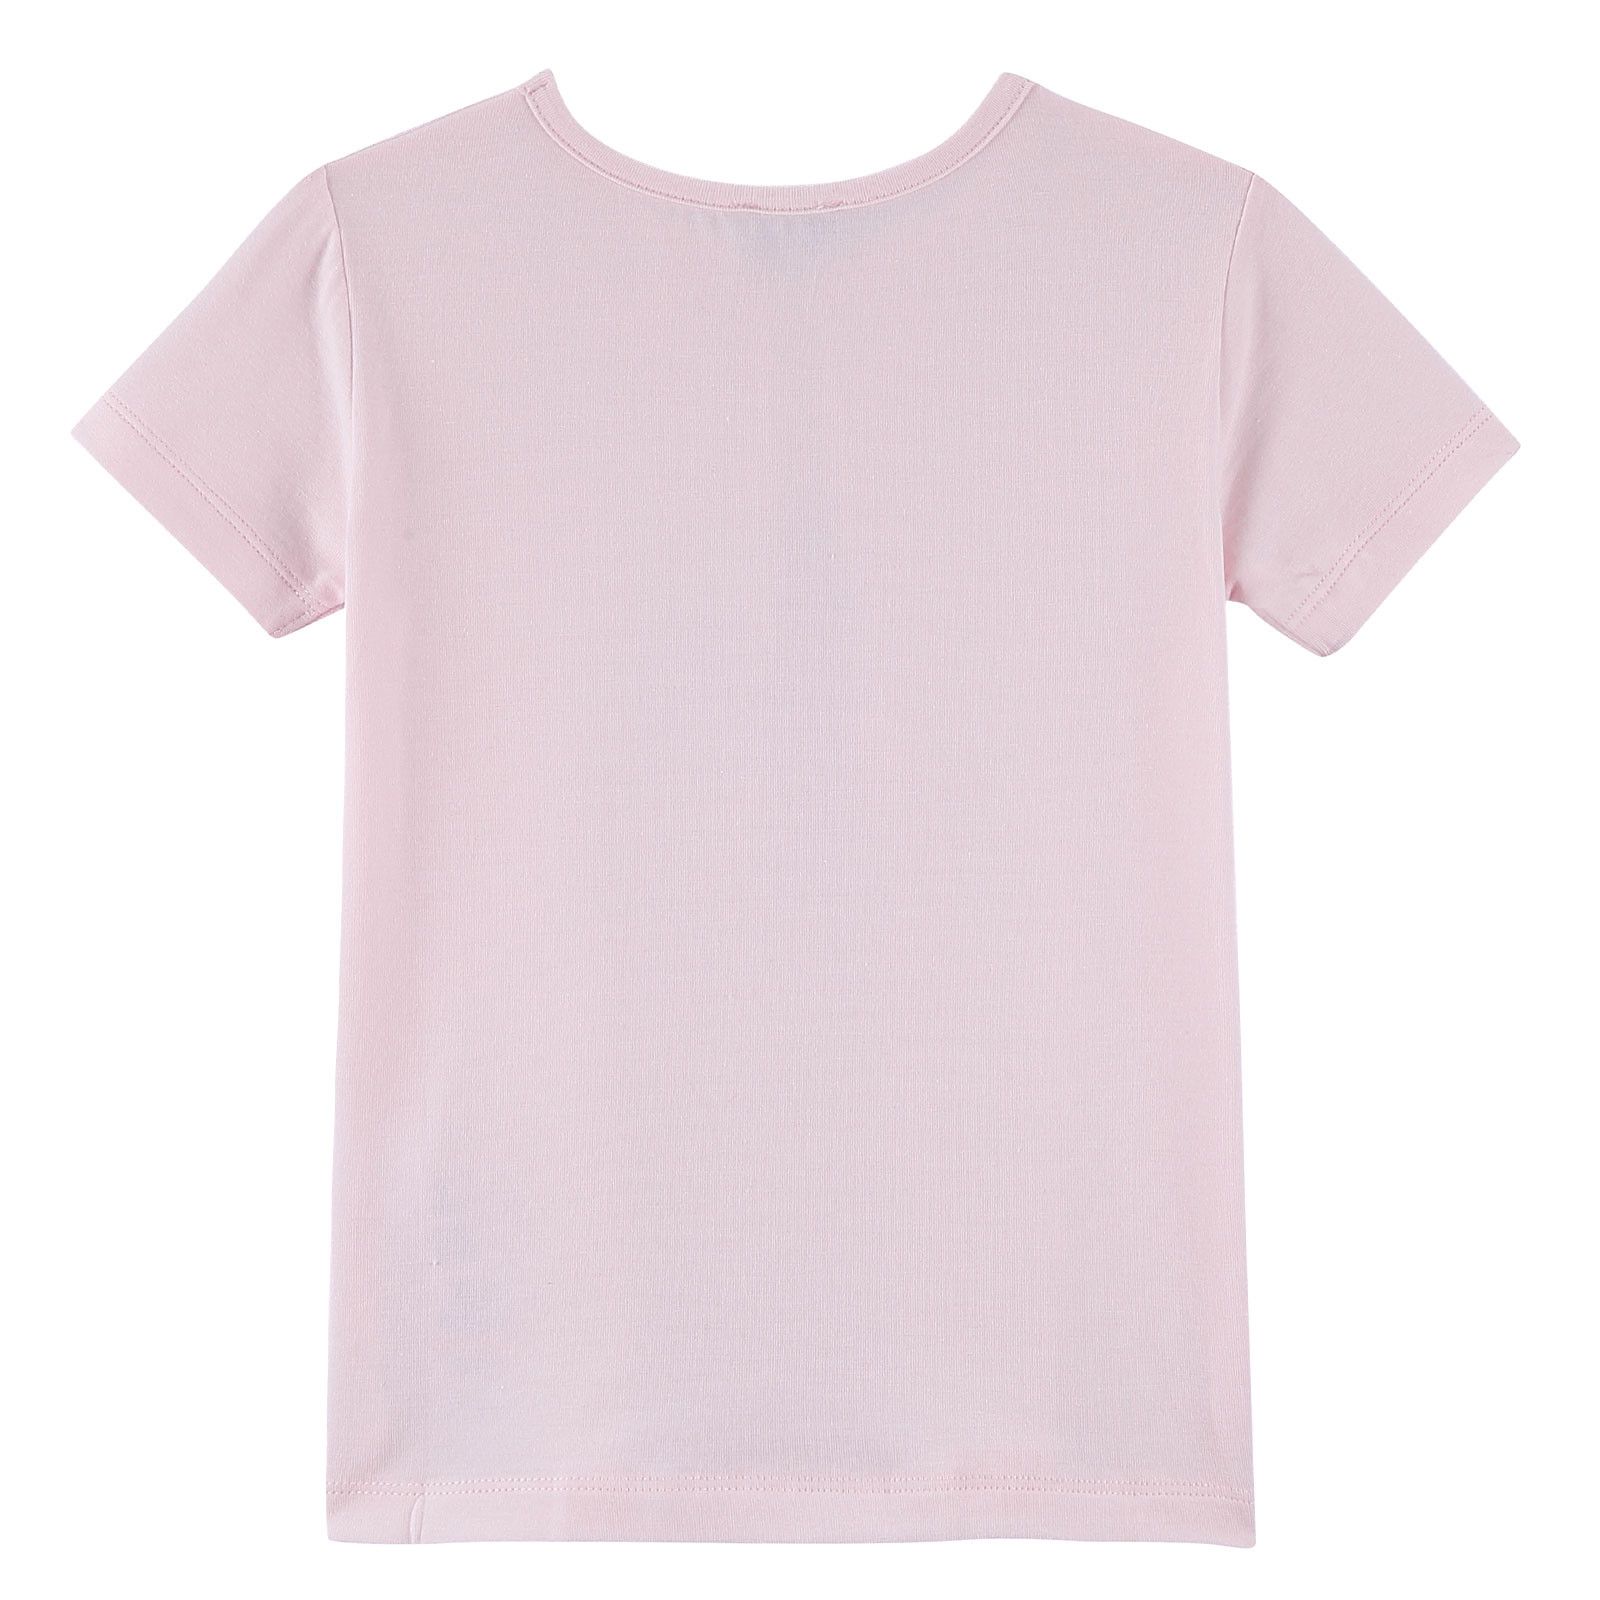 Girls Pink Cotton T-Shirt With Multicolor Horse Print - CÉMAROSE | Children's Fashion Store - 2